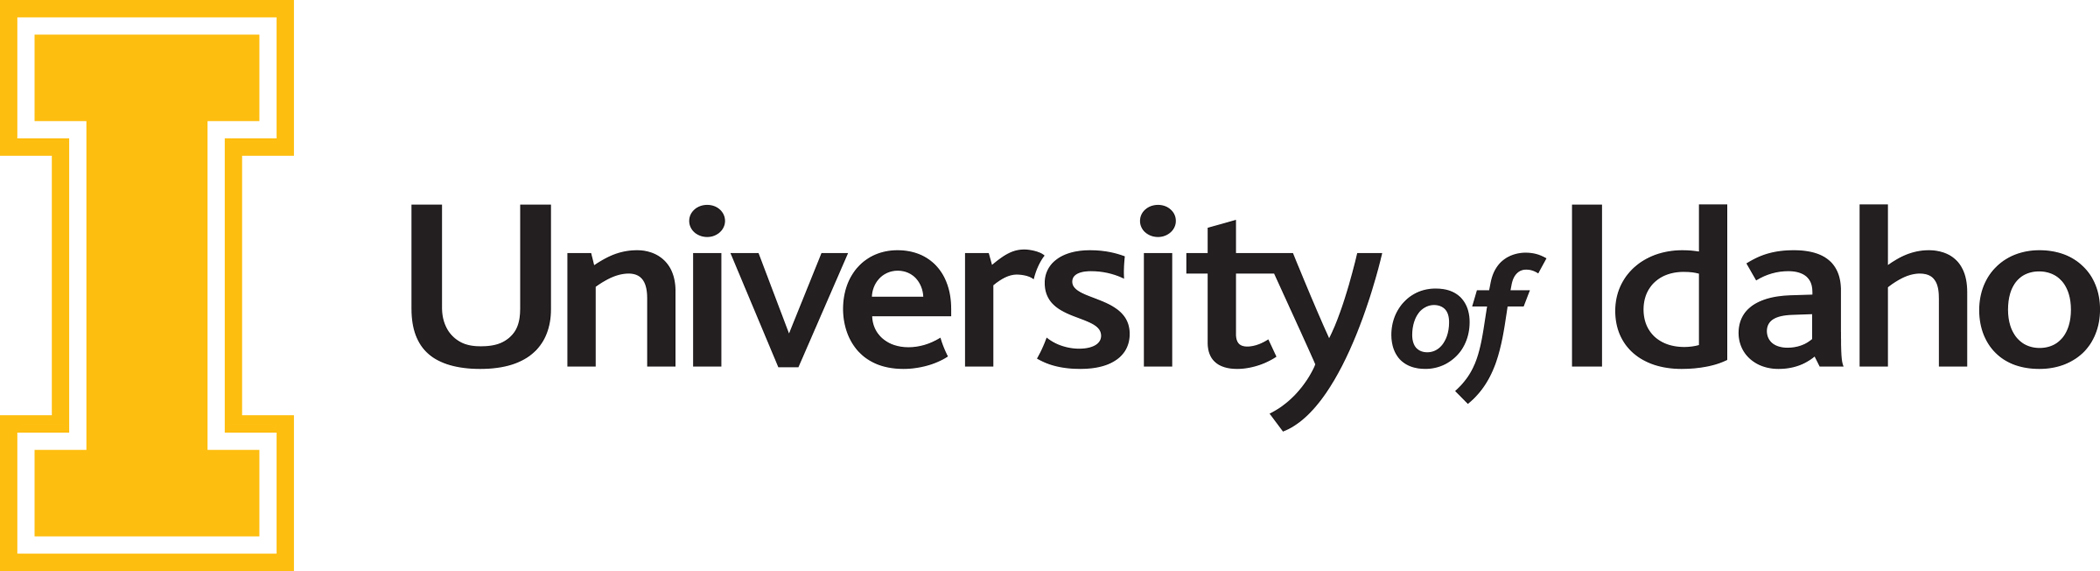 University of Idaho - I Banner